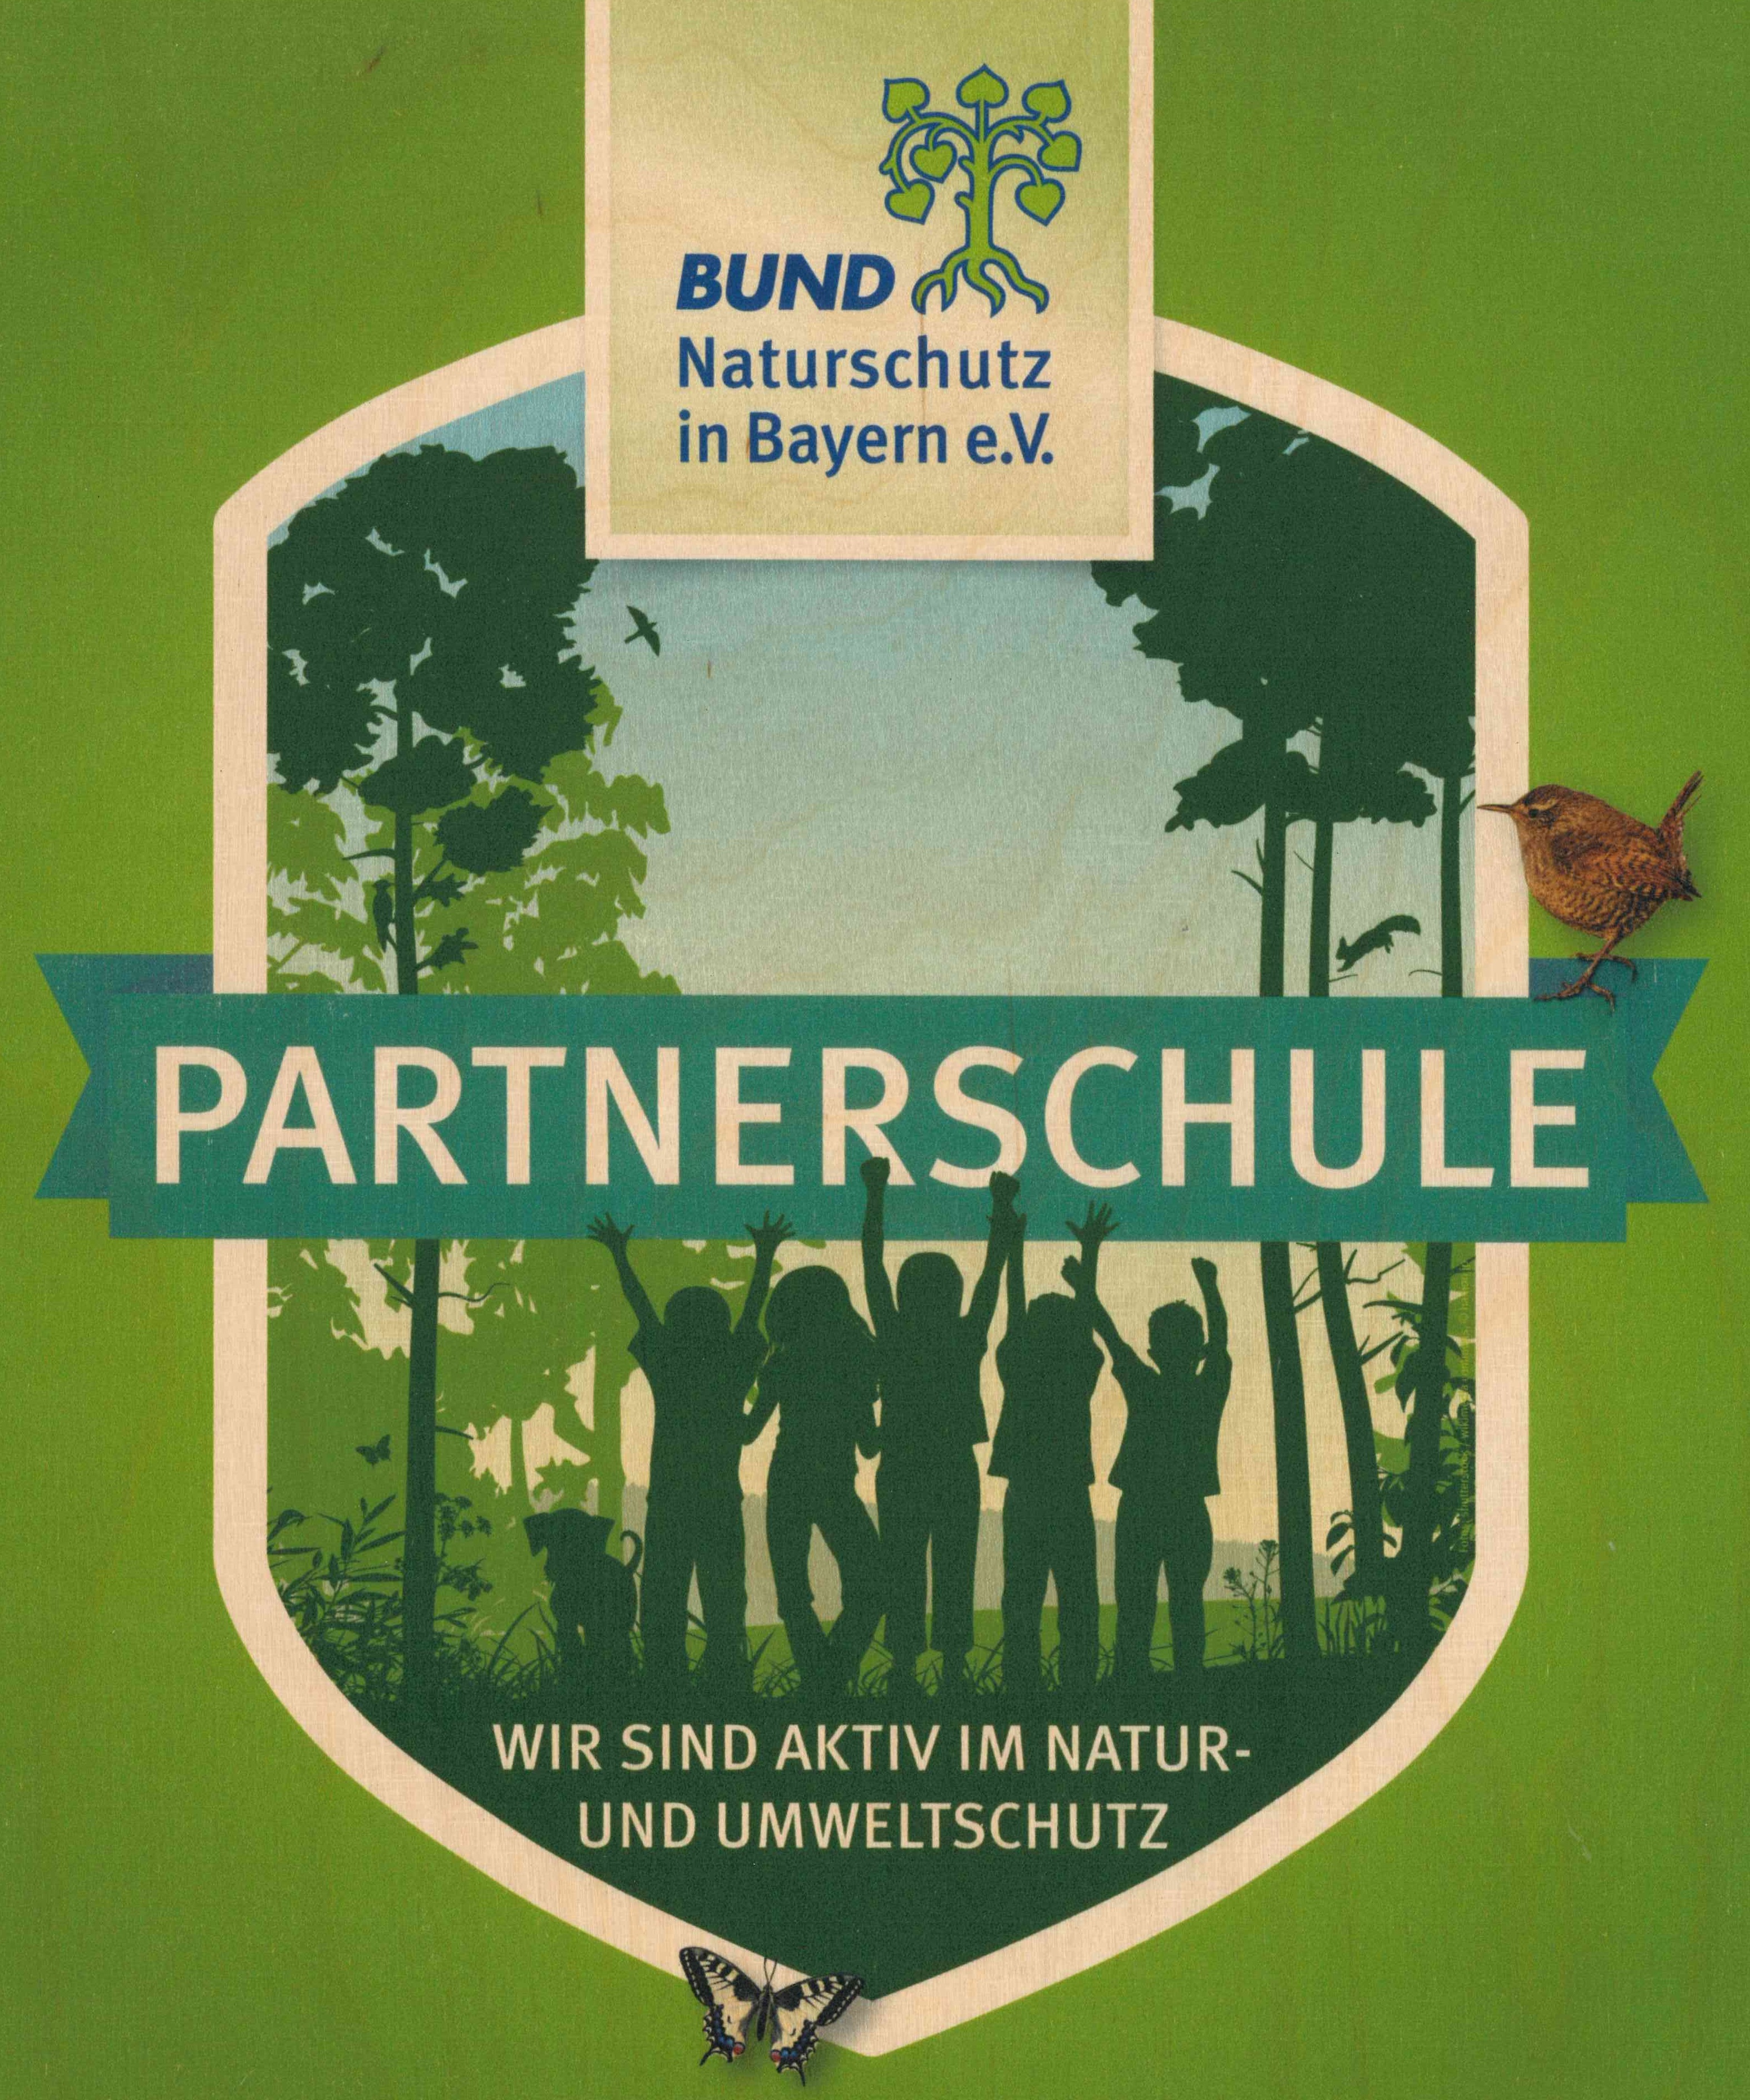 Partnerschule BUND Naturschutz